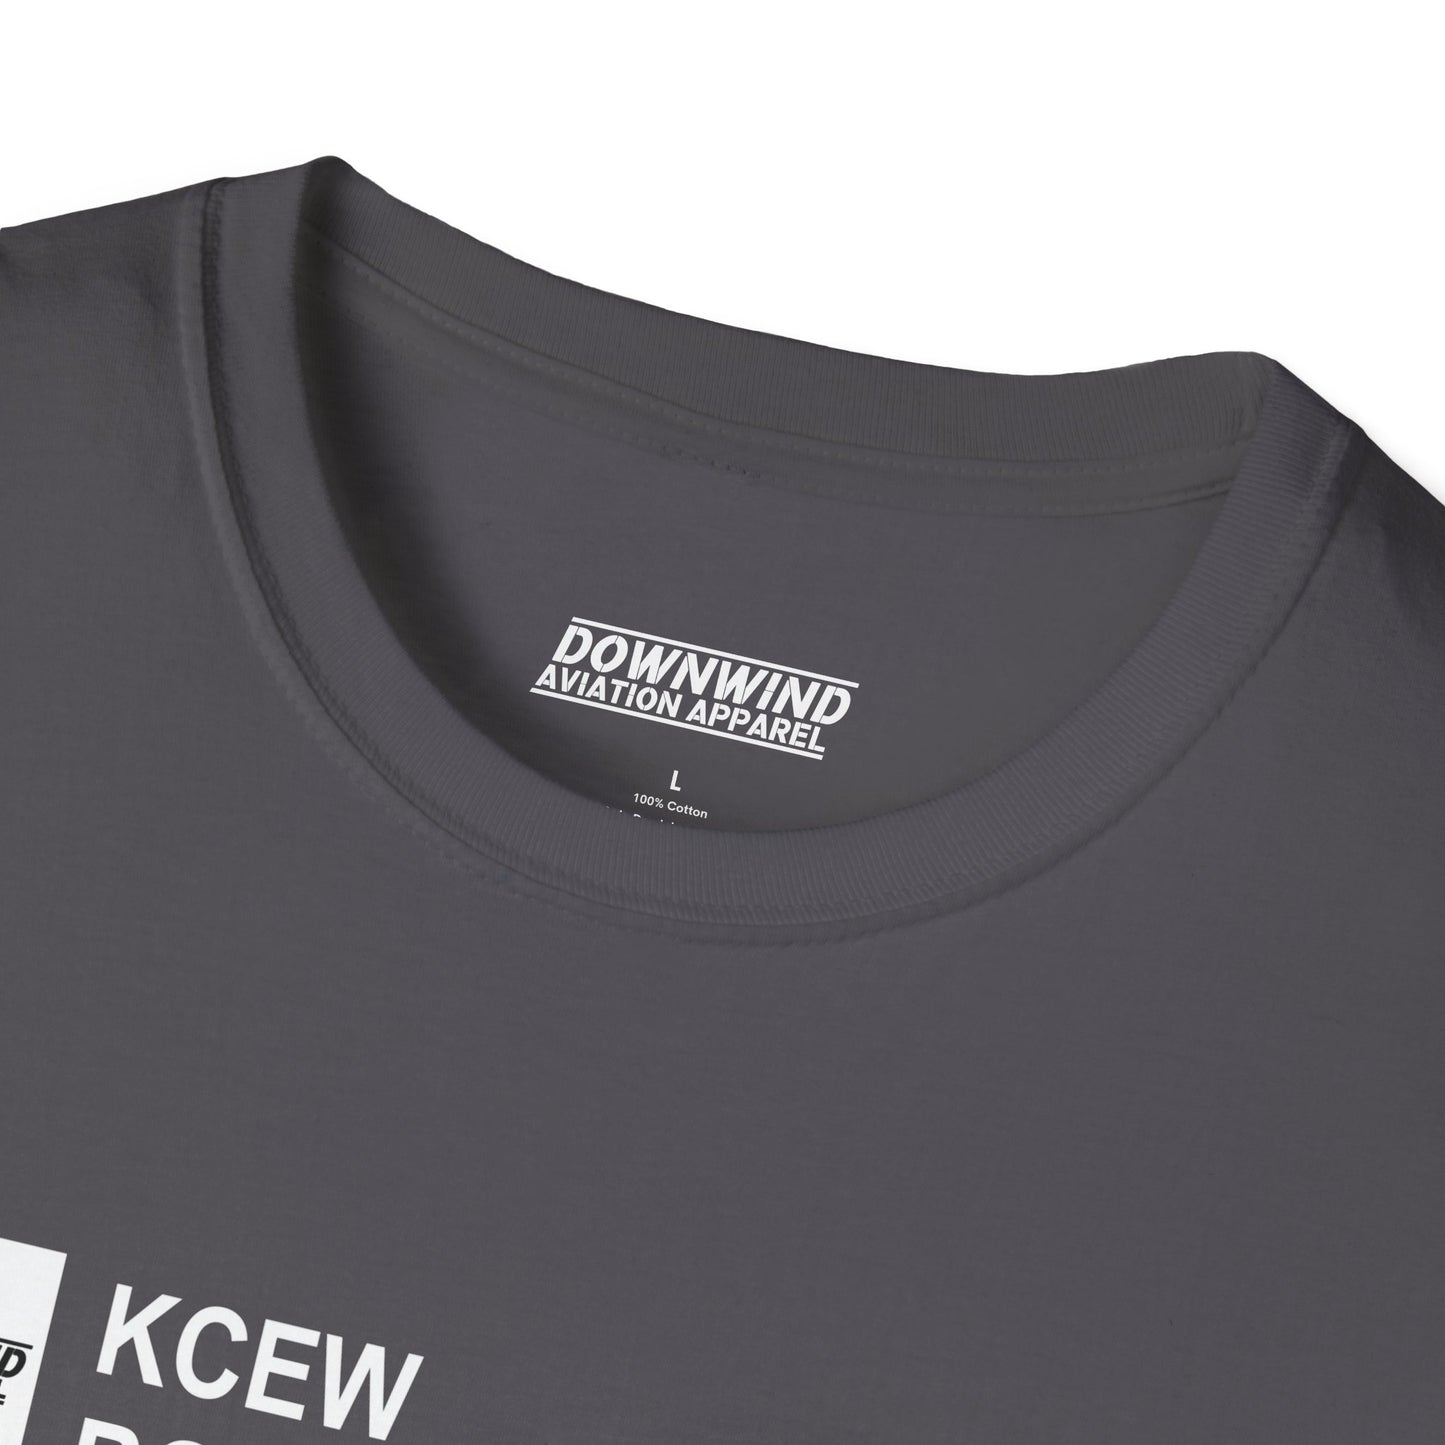 KCEW / Bob Sikes Airport T-Shirt